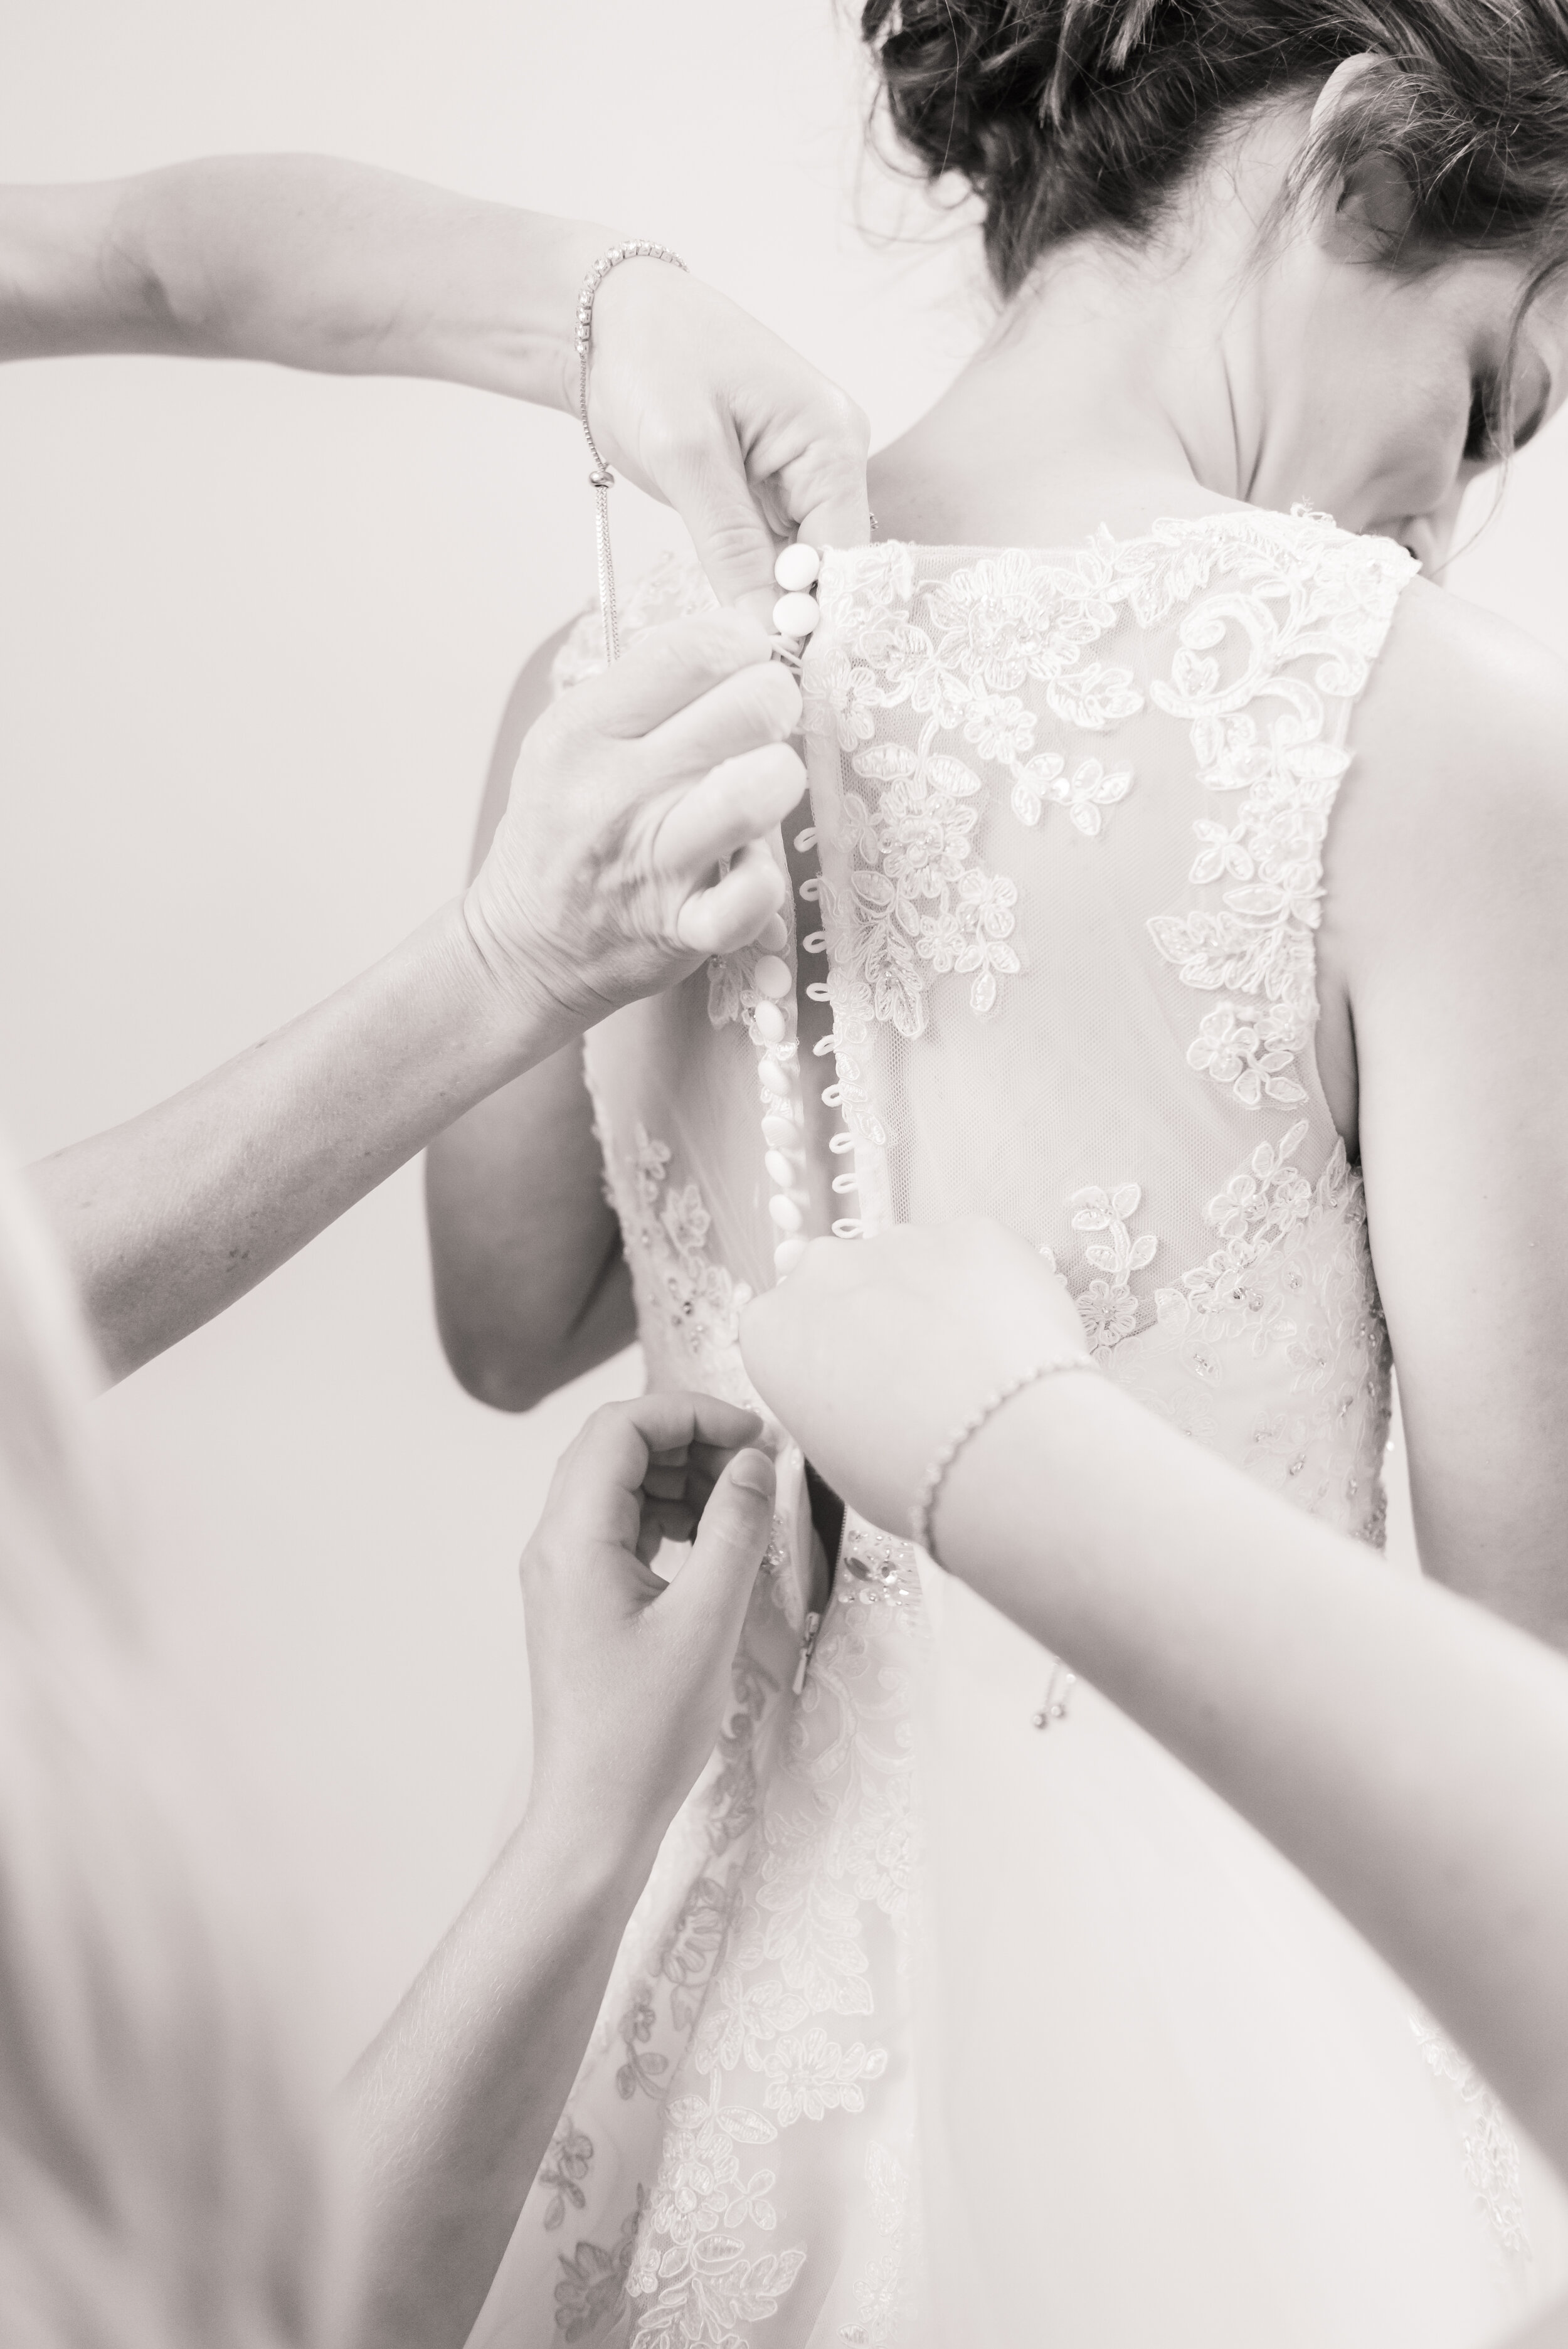 Voss Shanahan Wedding _ Pre Ceremony _ The Bride (67).jpg